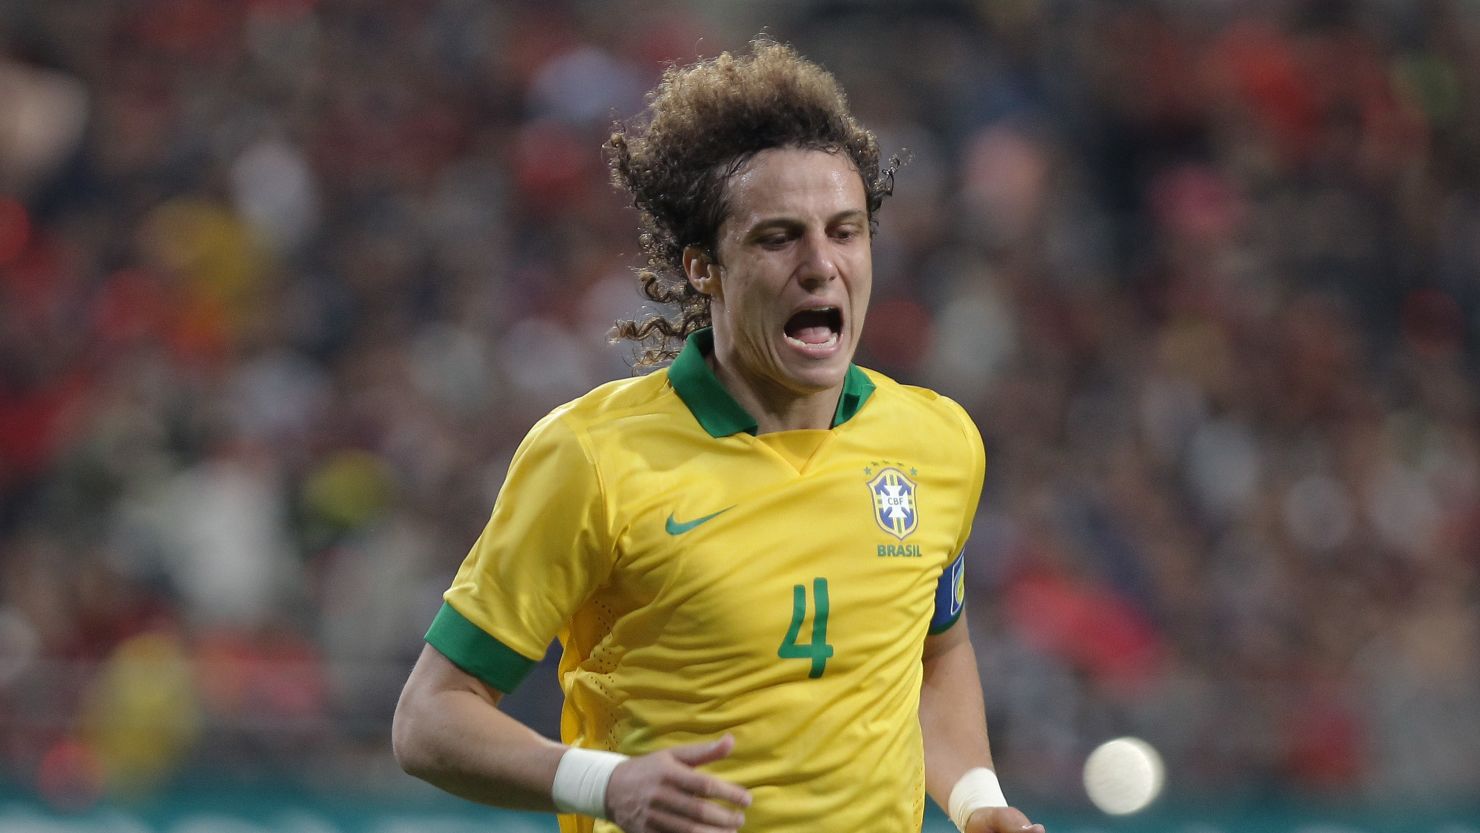 Chelsea have agreed to sell David Luiz to Paris Saint Germain.